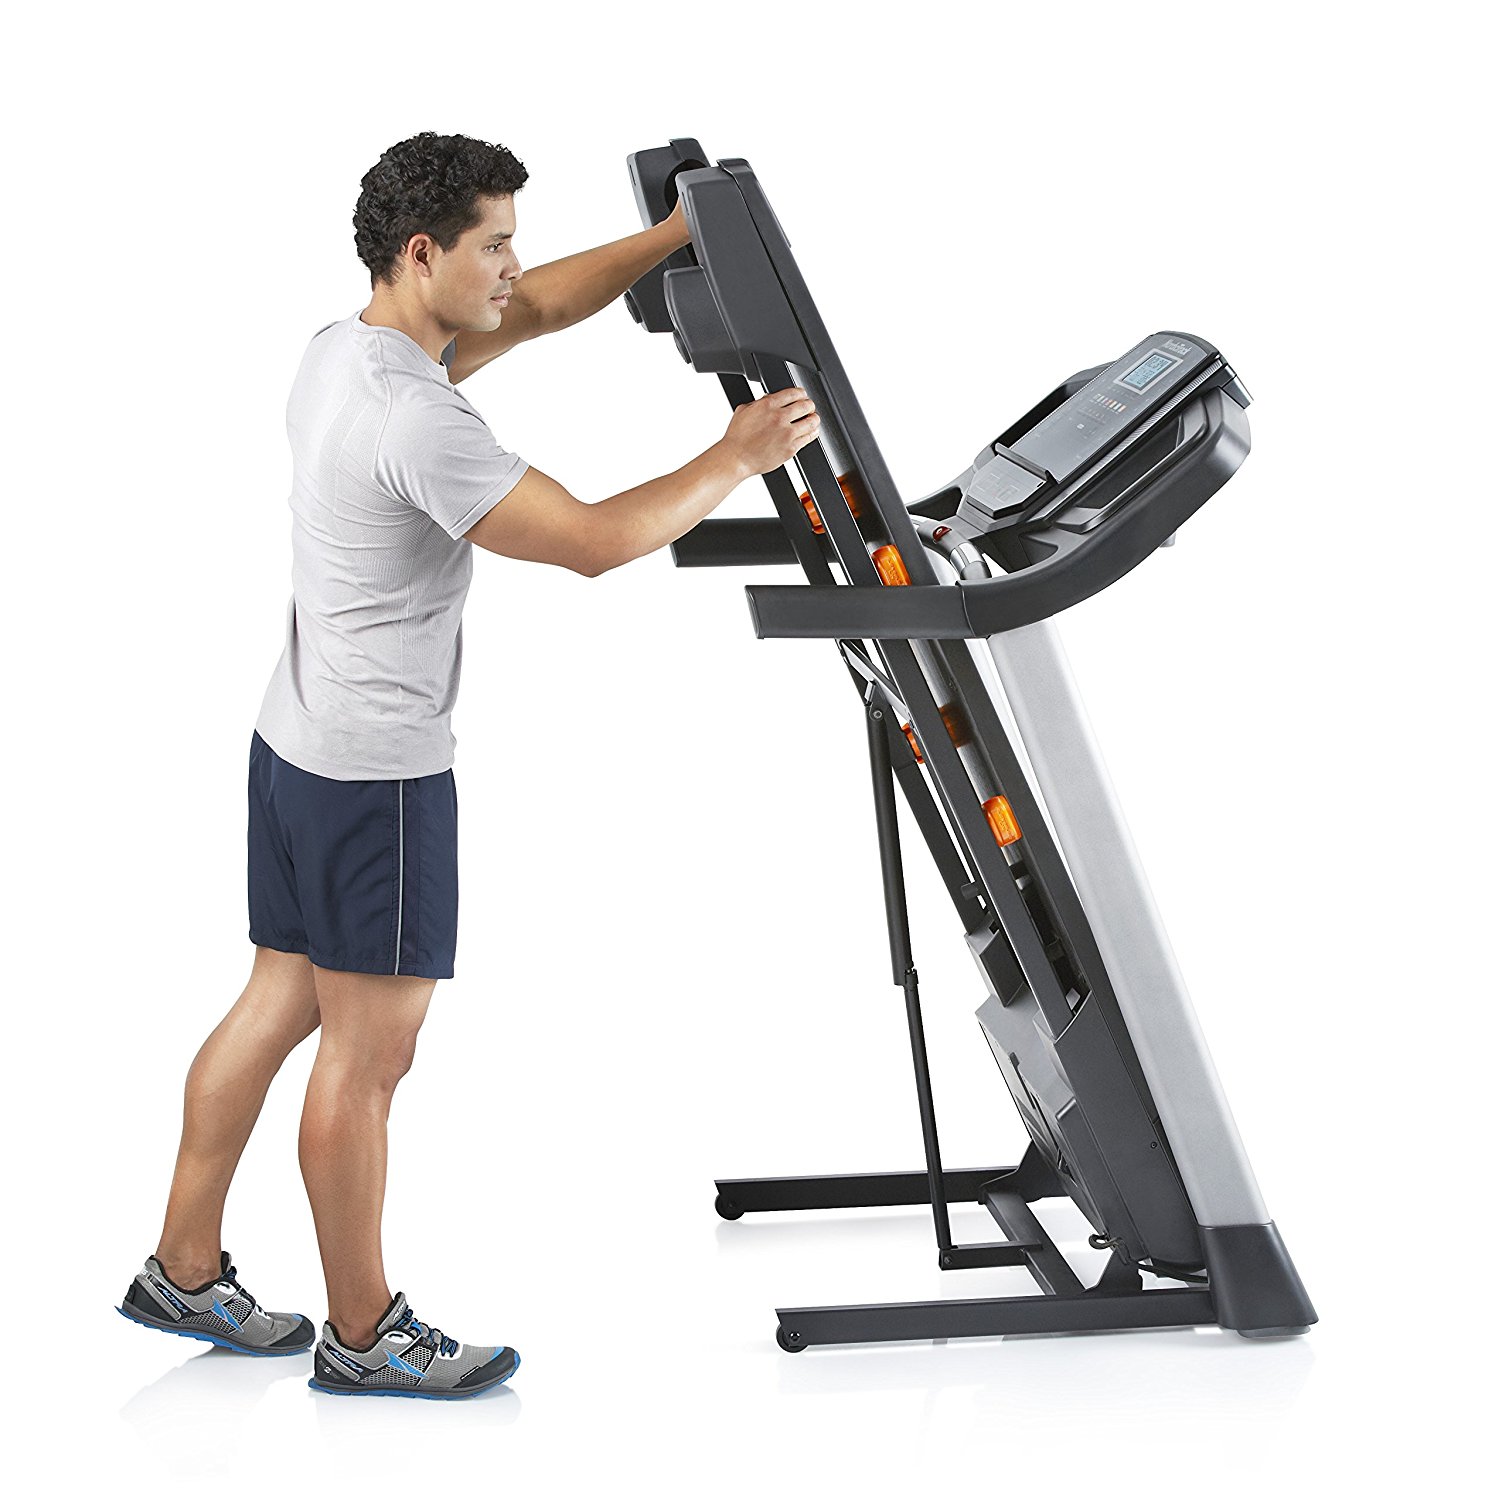 nordictrack treadmill fold optimum fitness rate heart footprint